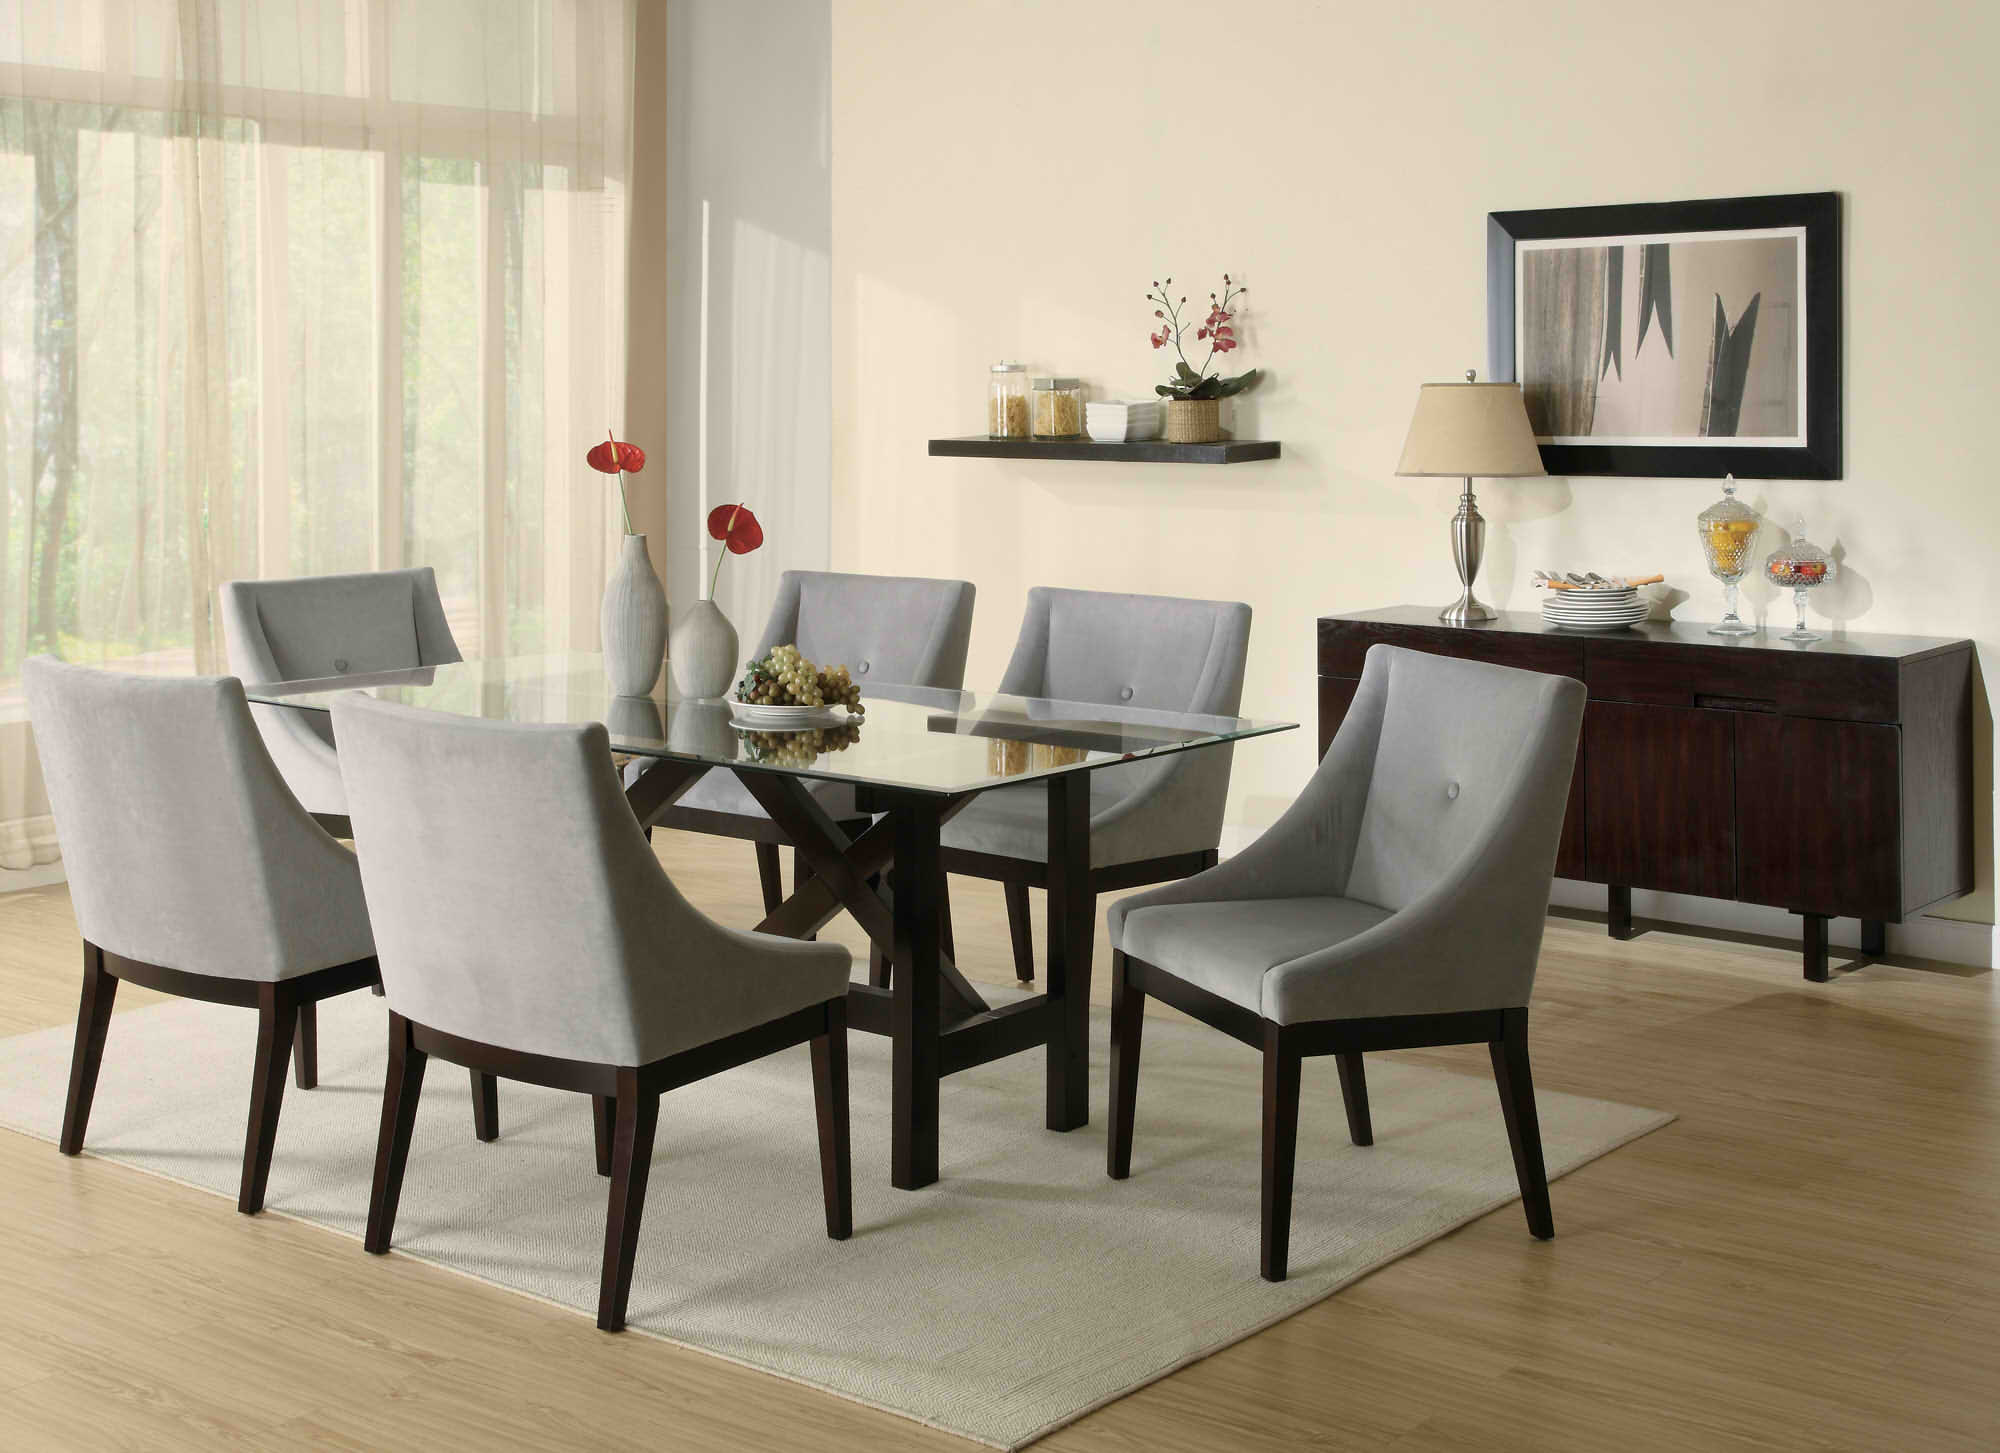 stylish dining room chairs photo - 1